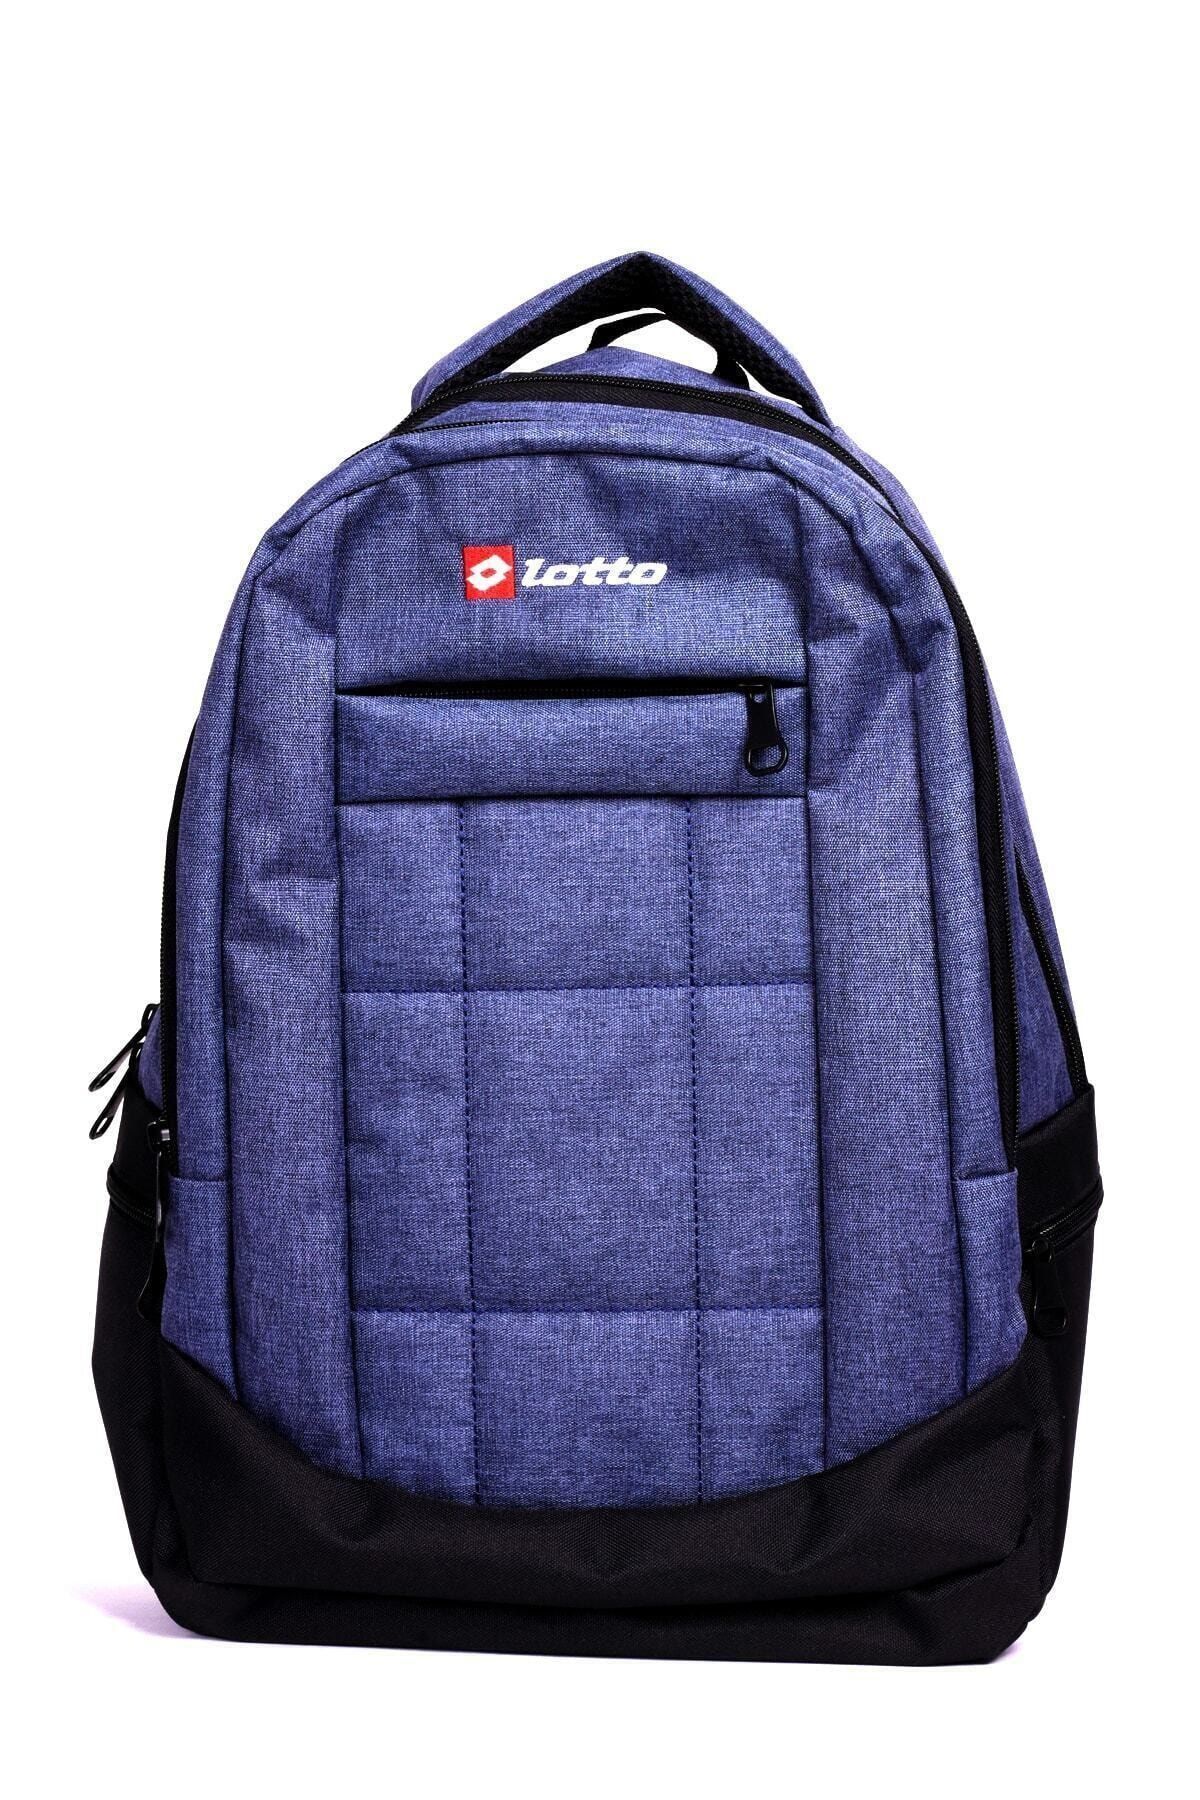 Lotto Unisex Mavi Sırt Çantası  Aboott Backpack R7838